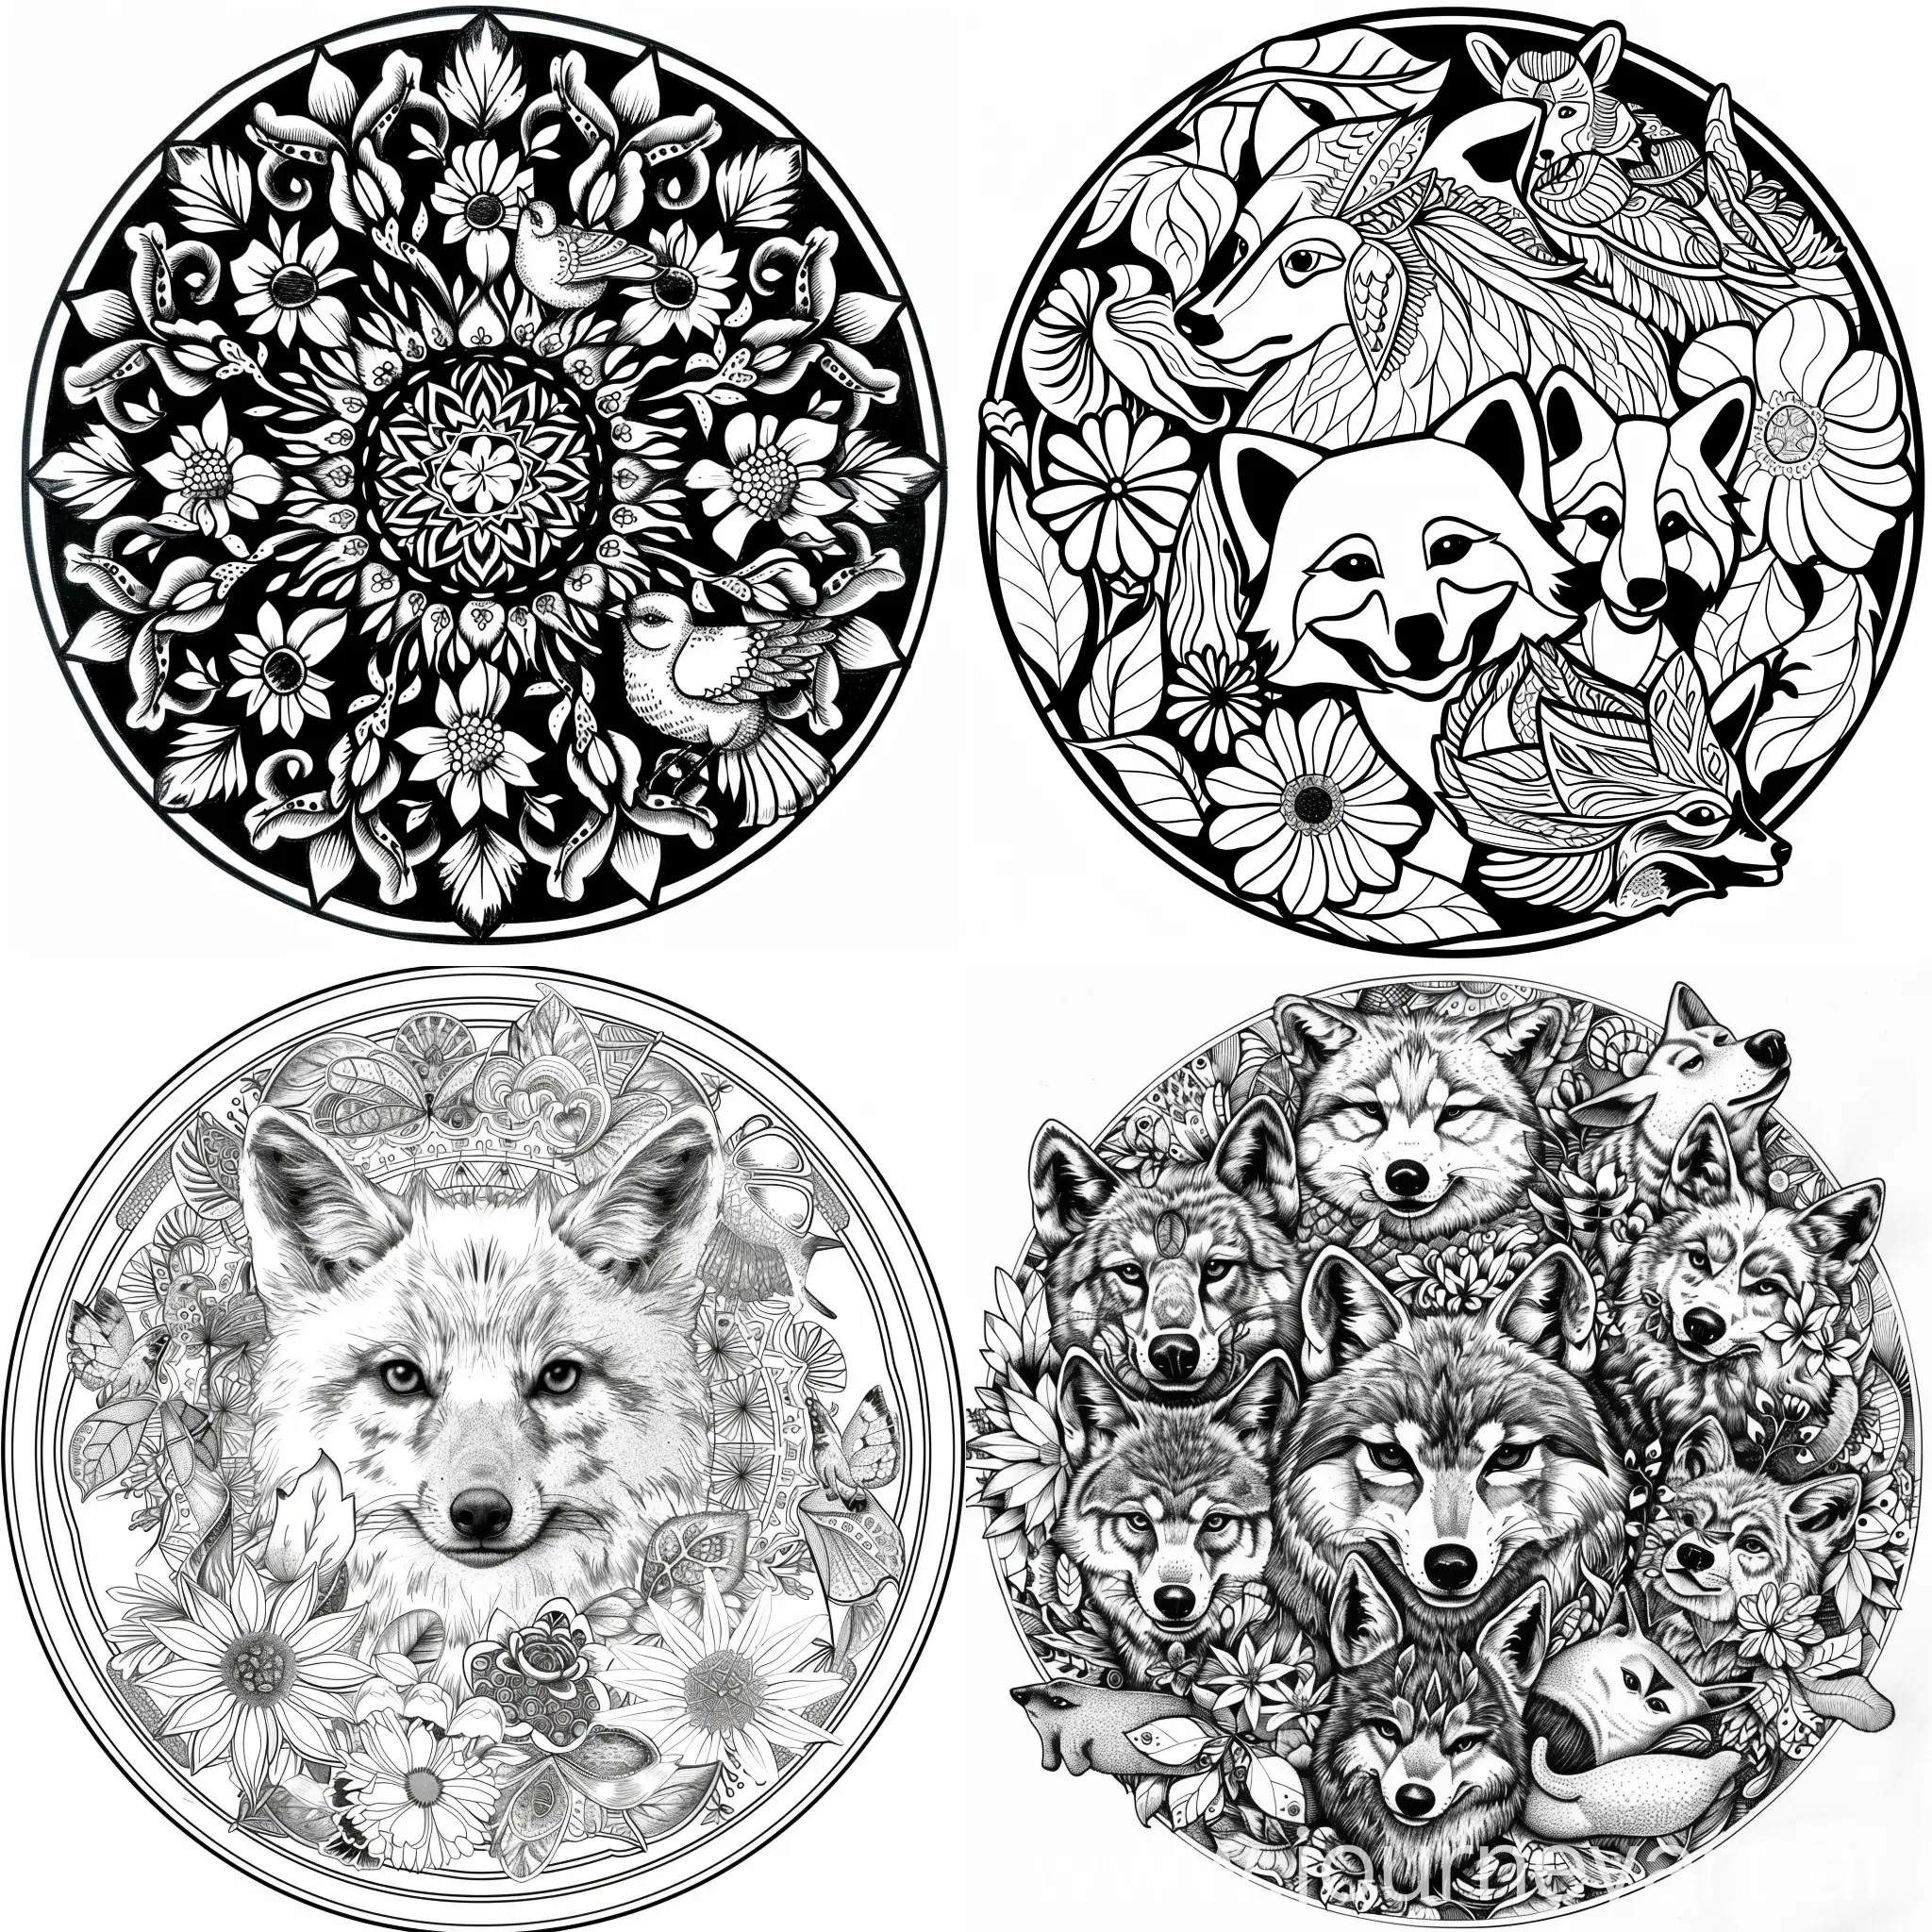 Coloring-Mandala-with-Friendly-Animals